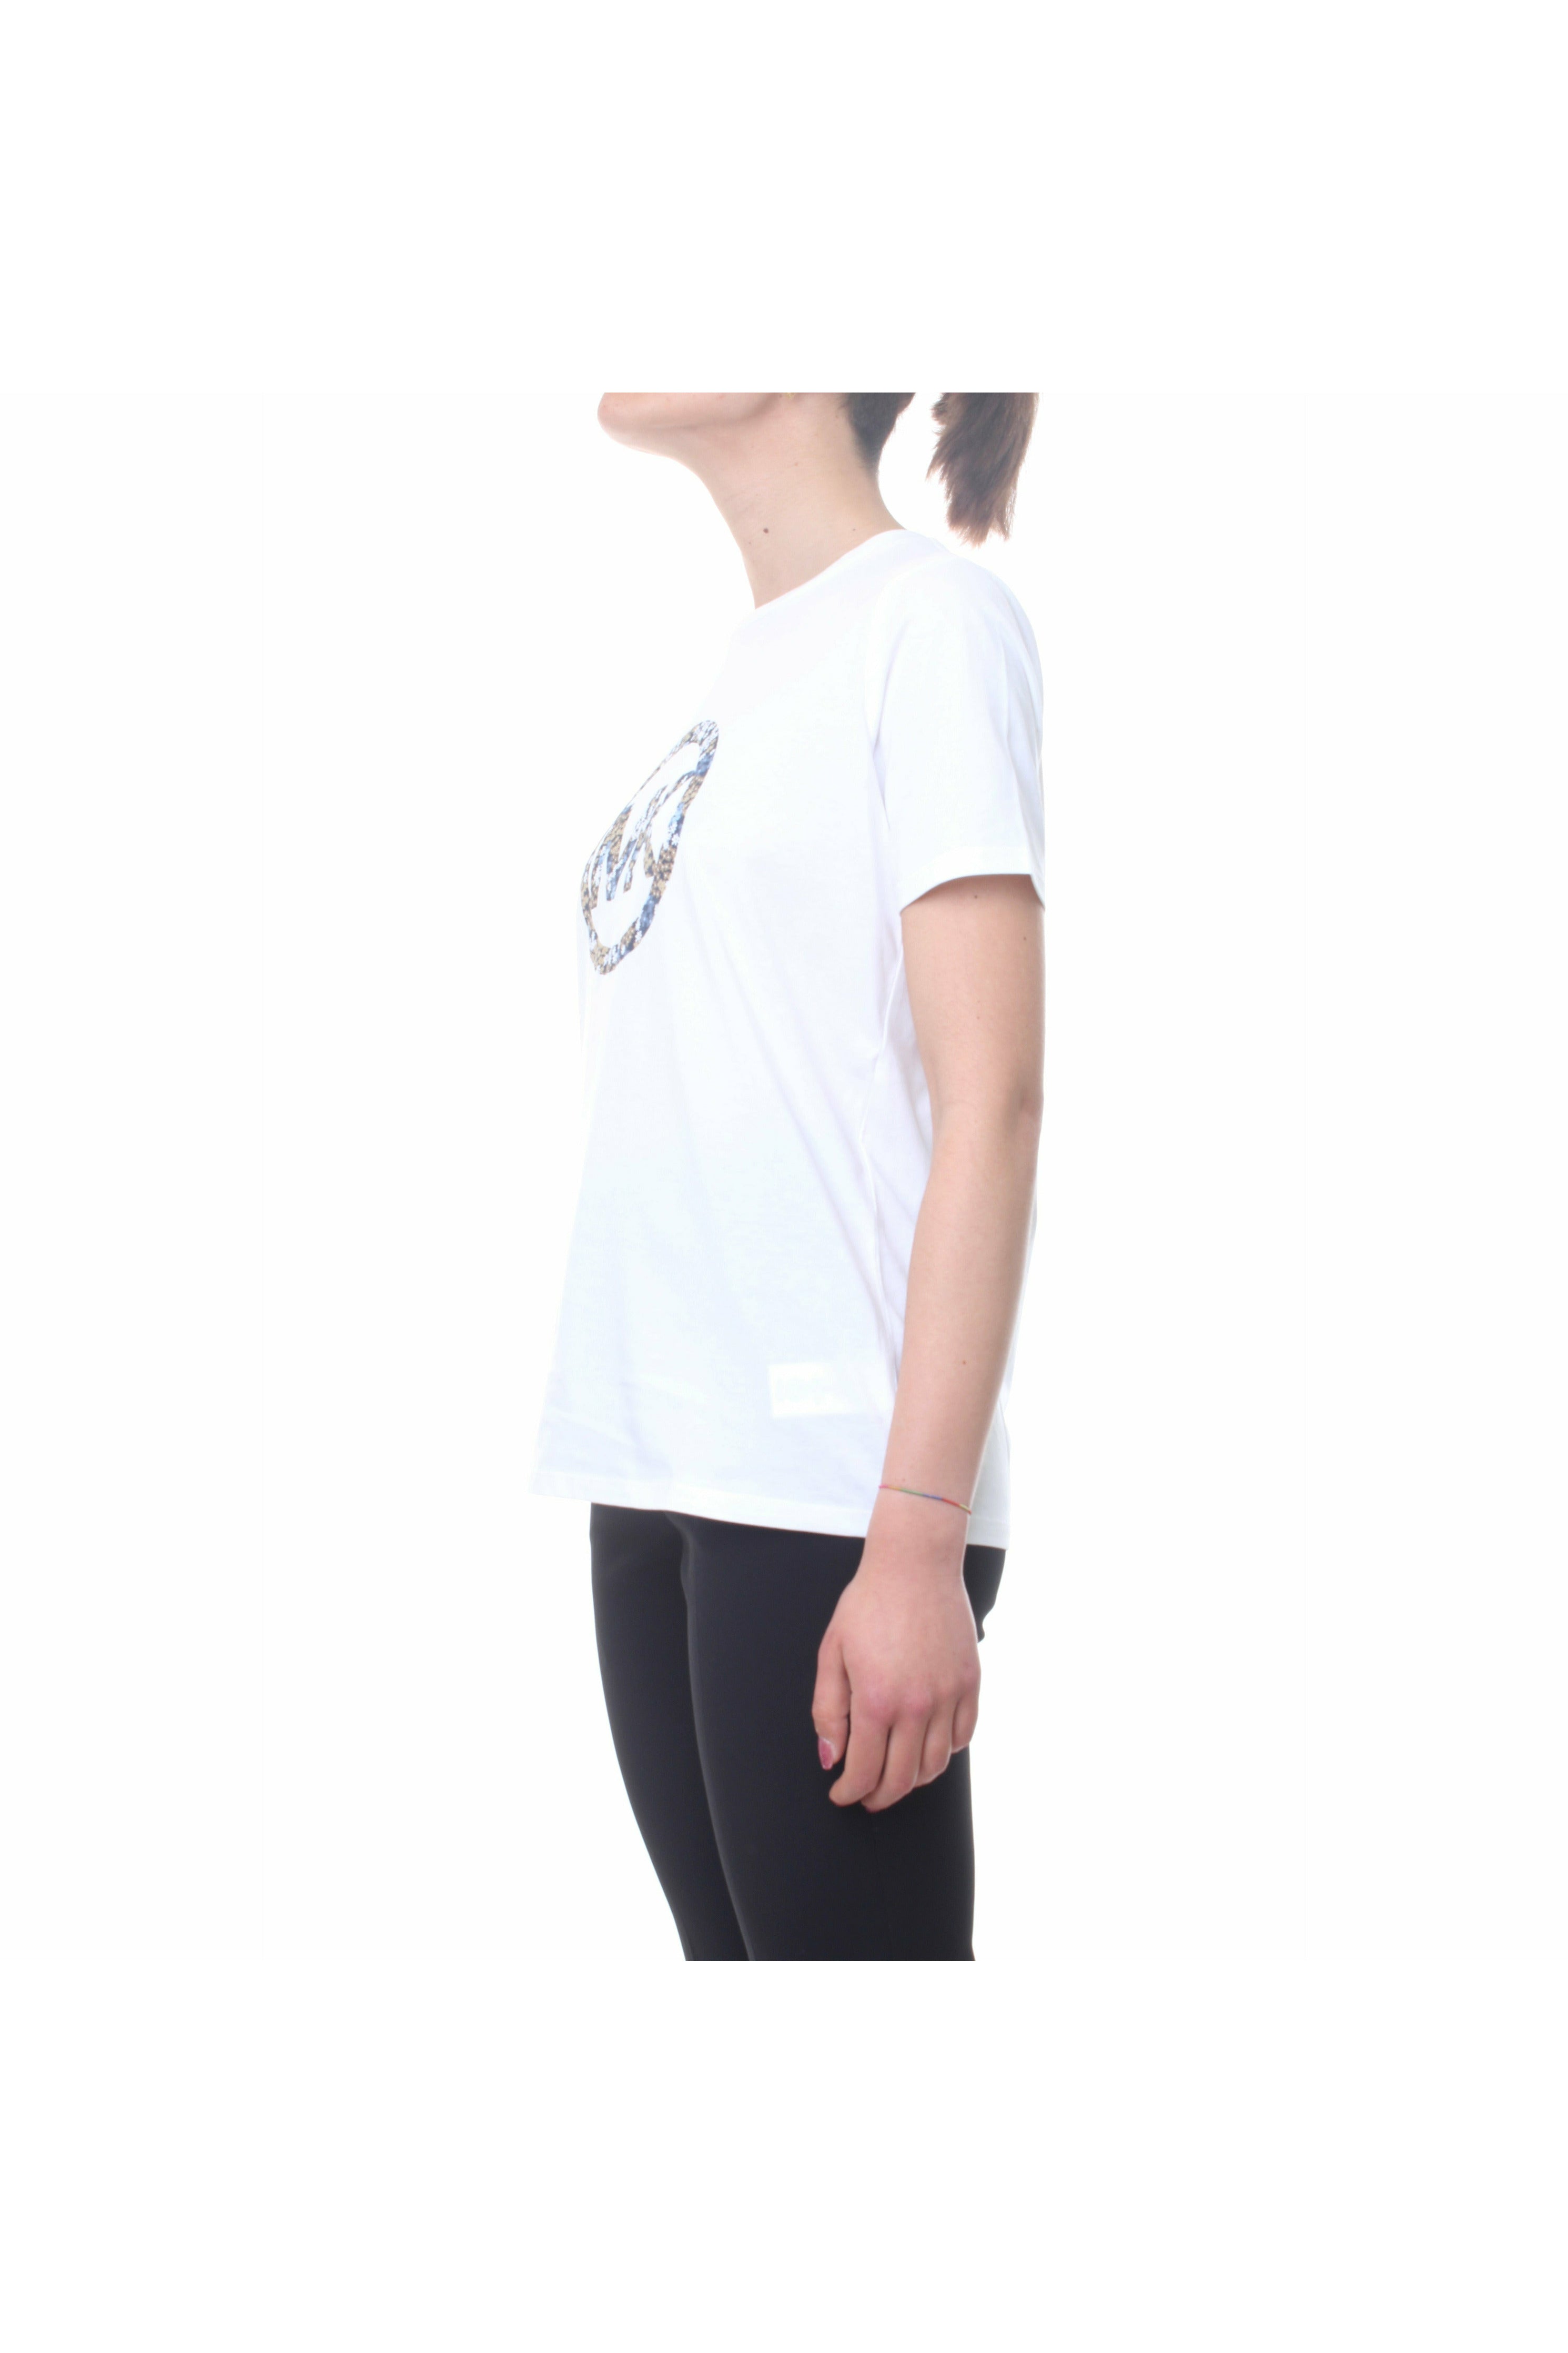 MICHAELKORS MB950PY97J t-shirt manica corta con logo floreale stampato